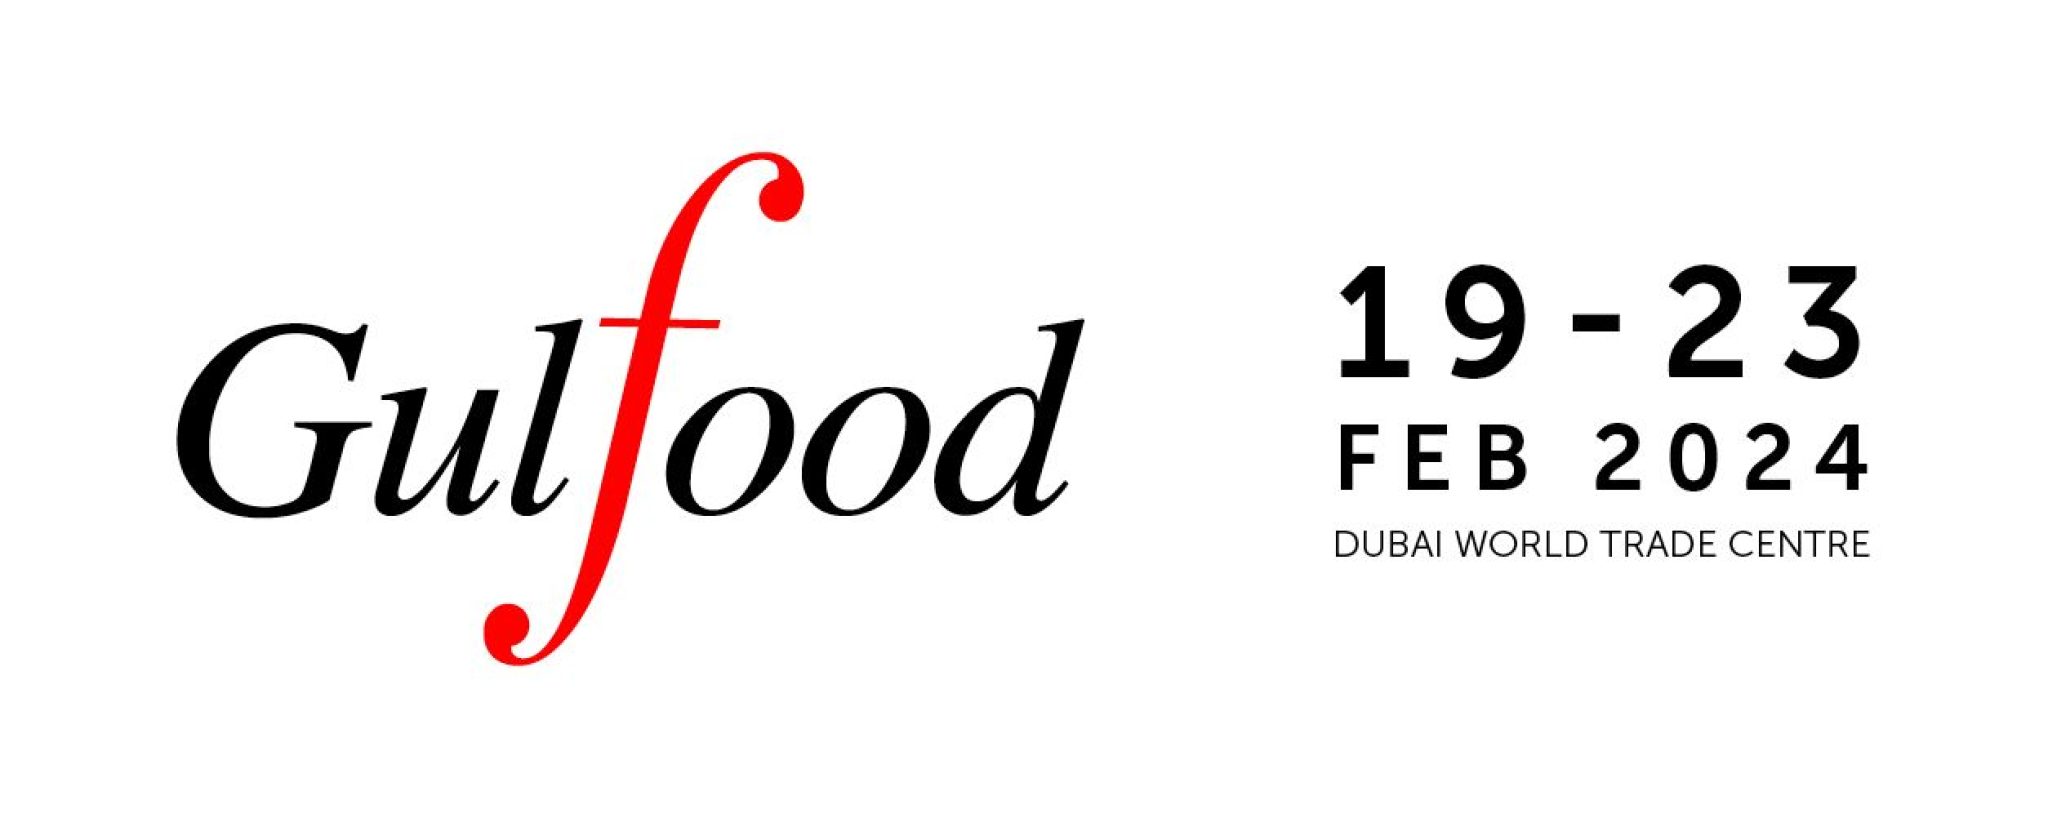 Gulfood Exhibition 2024 dates Dubai UAE Travel, Tour Guide